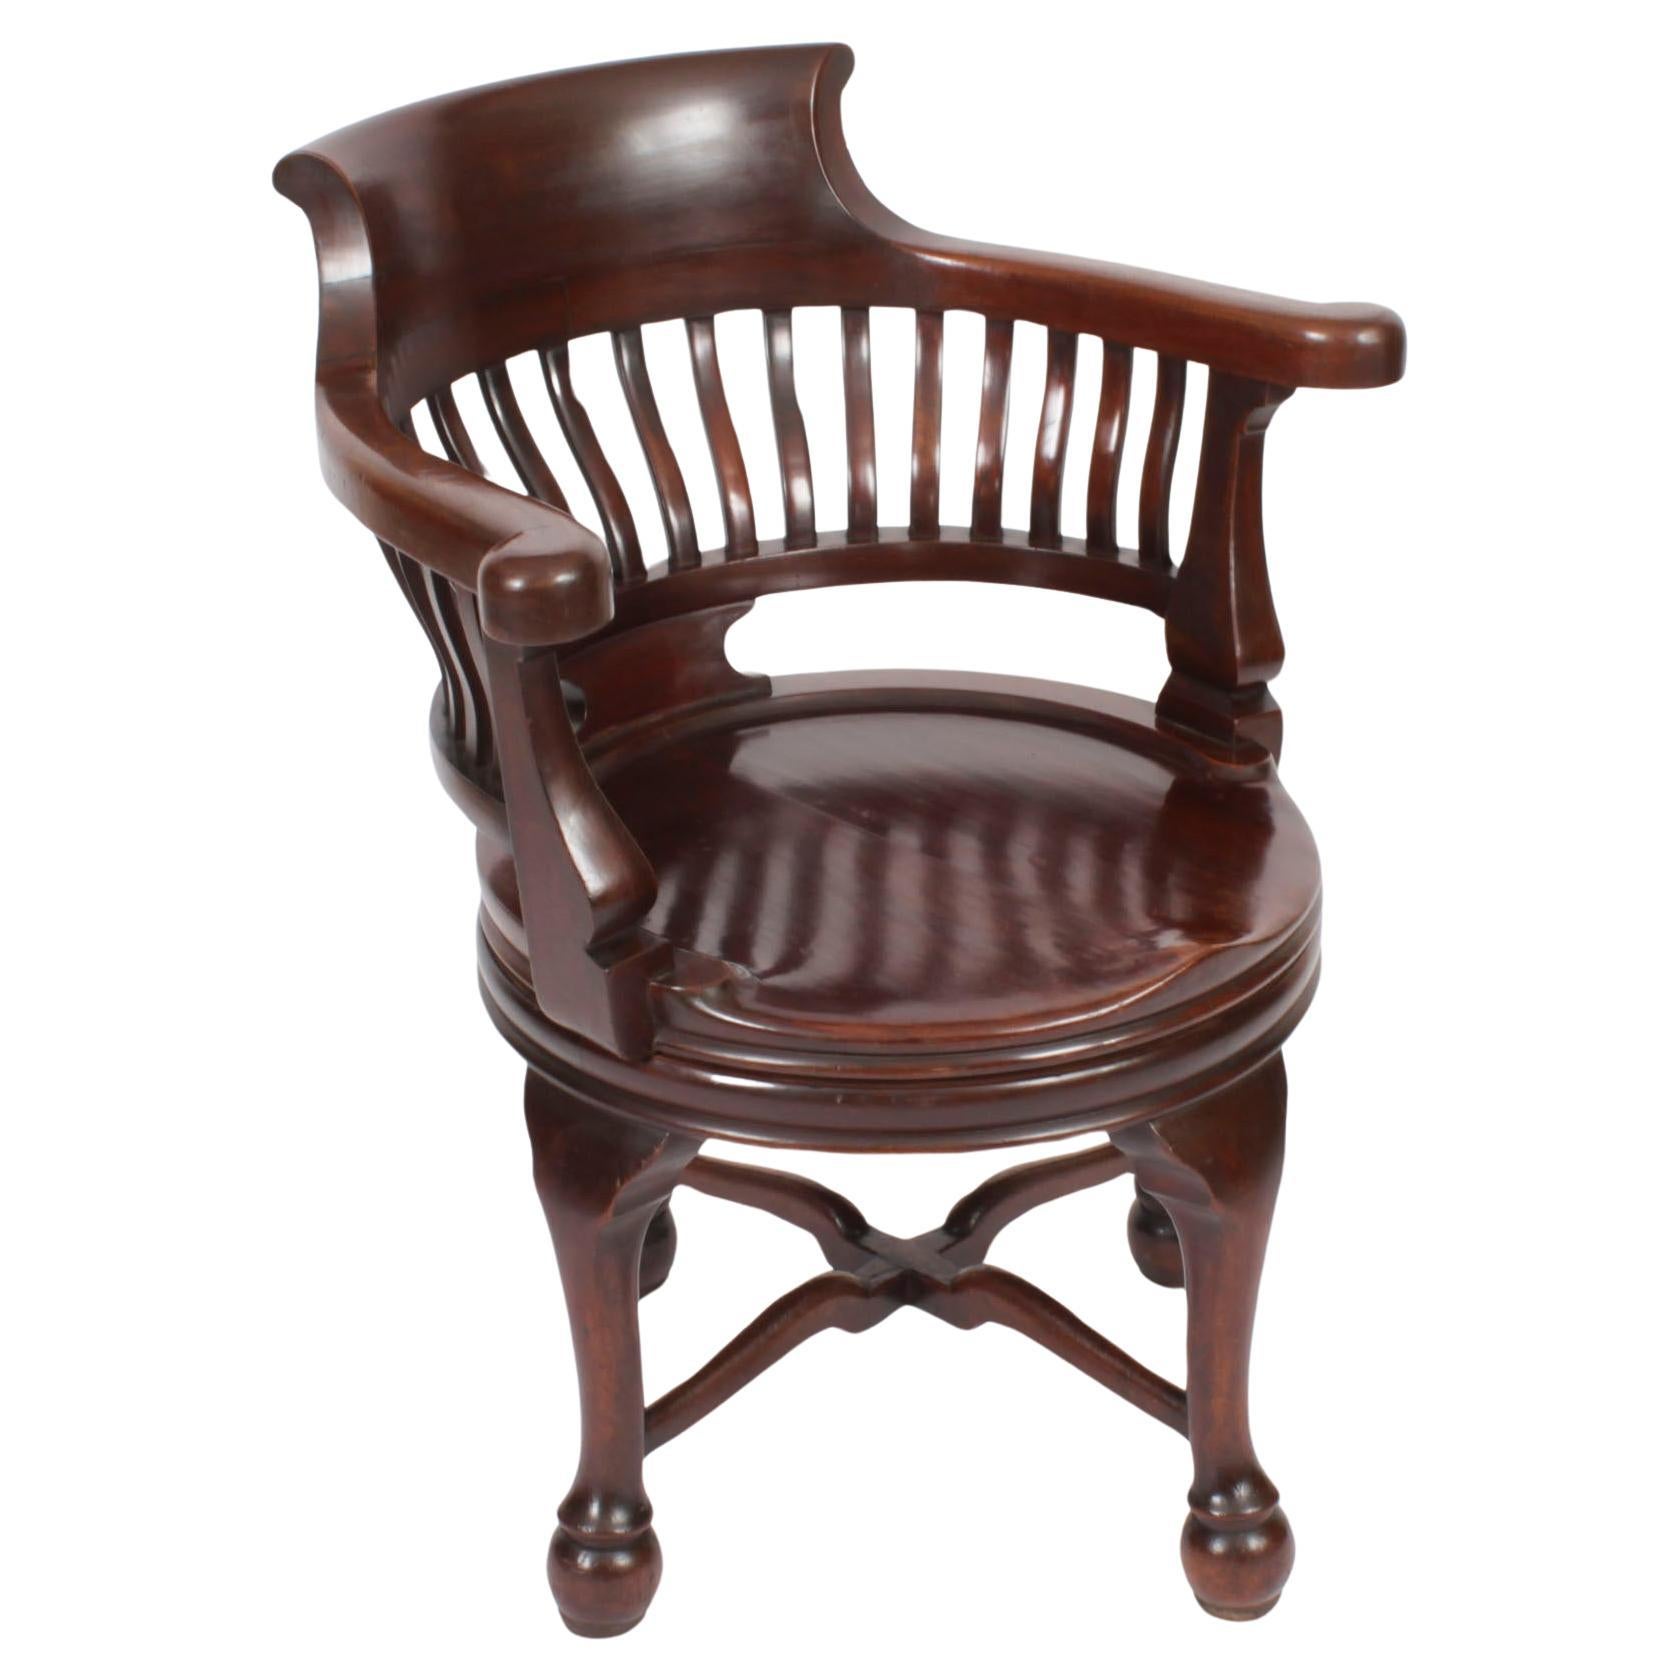 Antique Victorian Walnut Revolving Desk Chair c.1880 19th Century For Sale